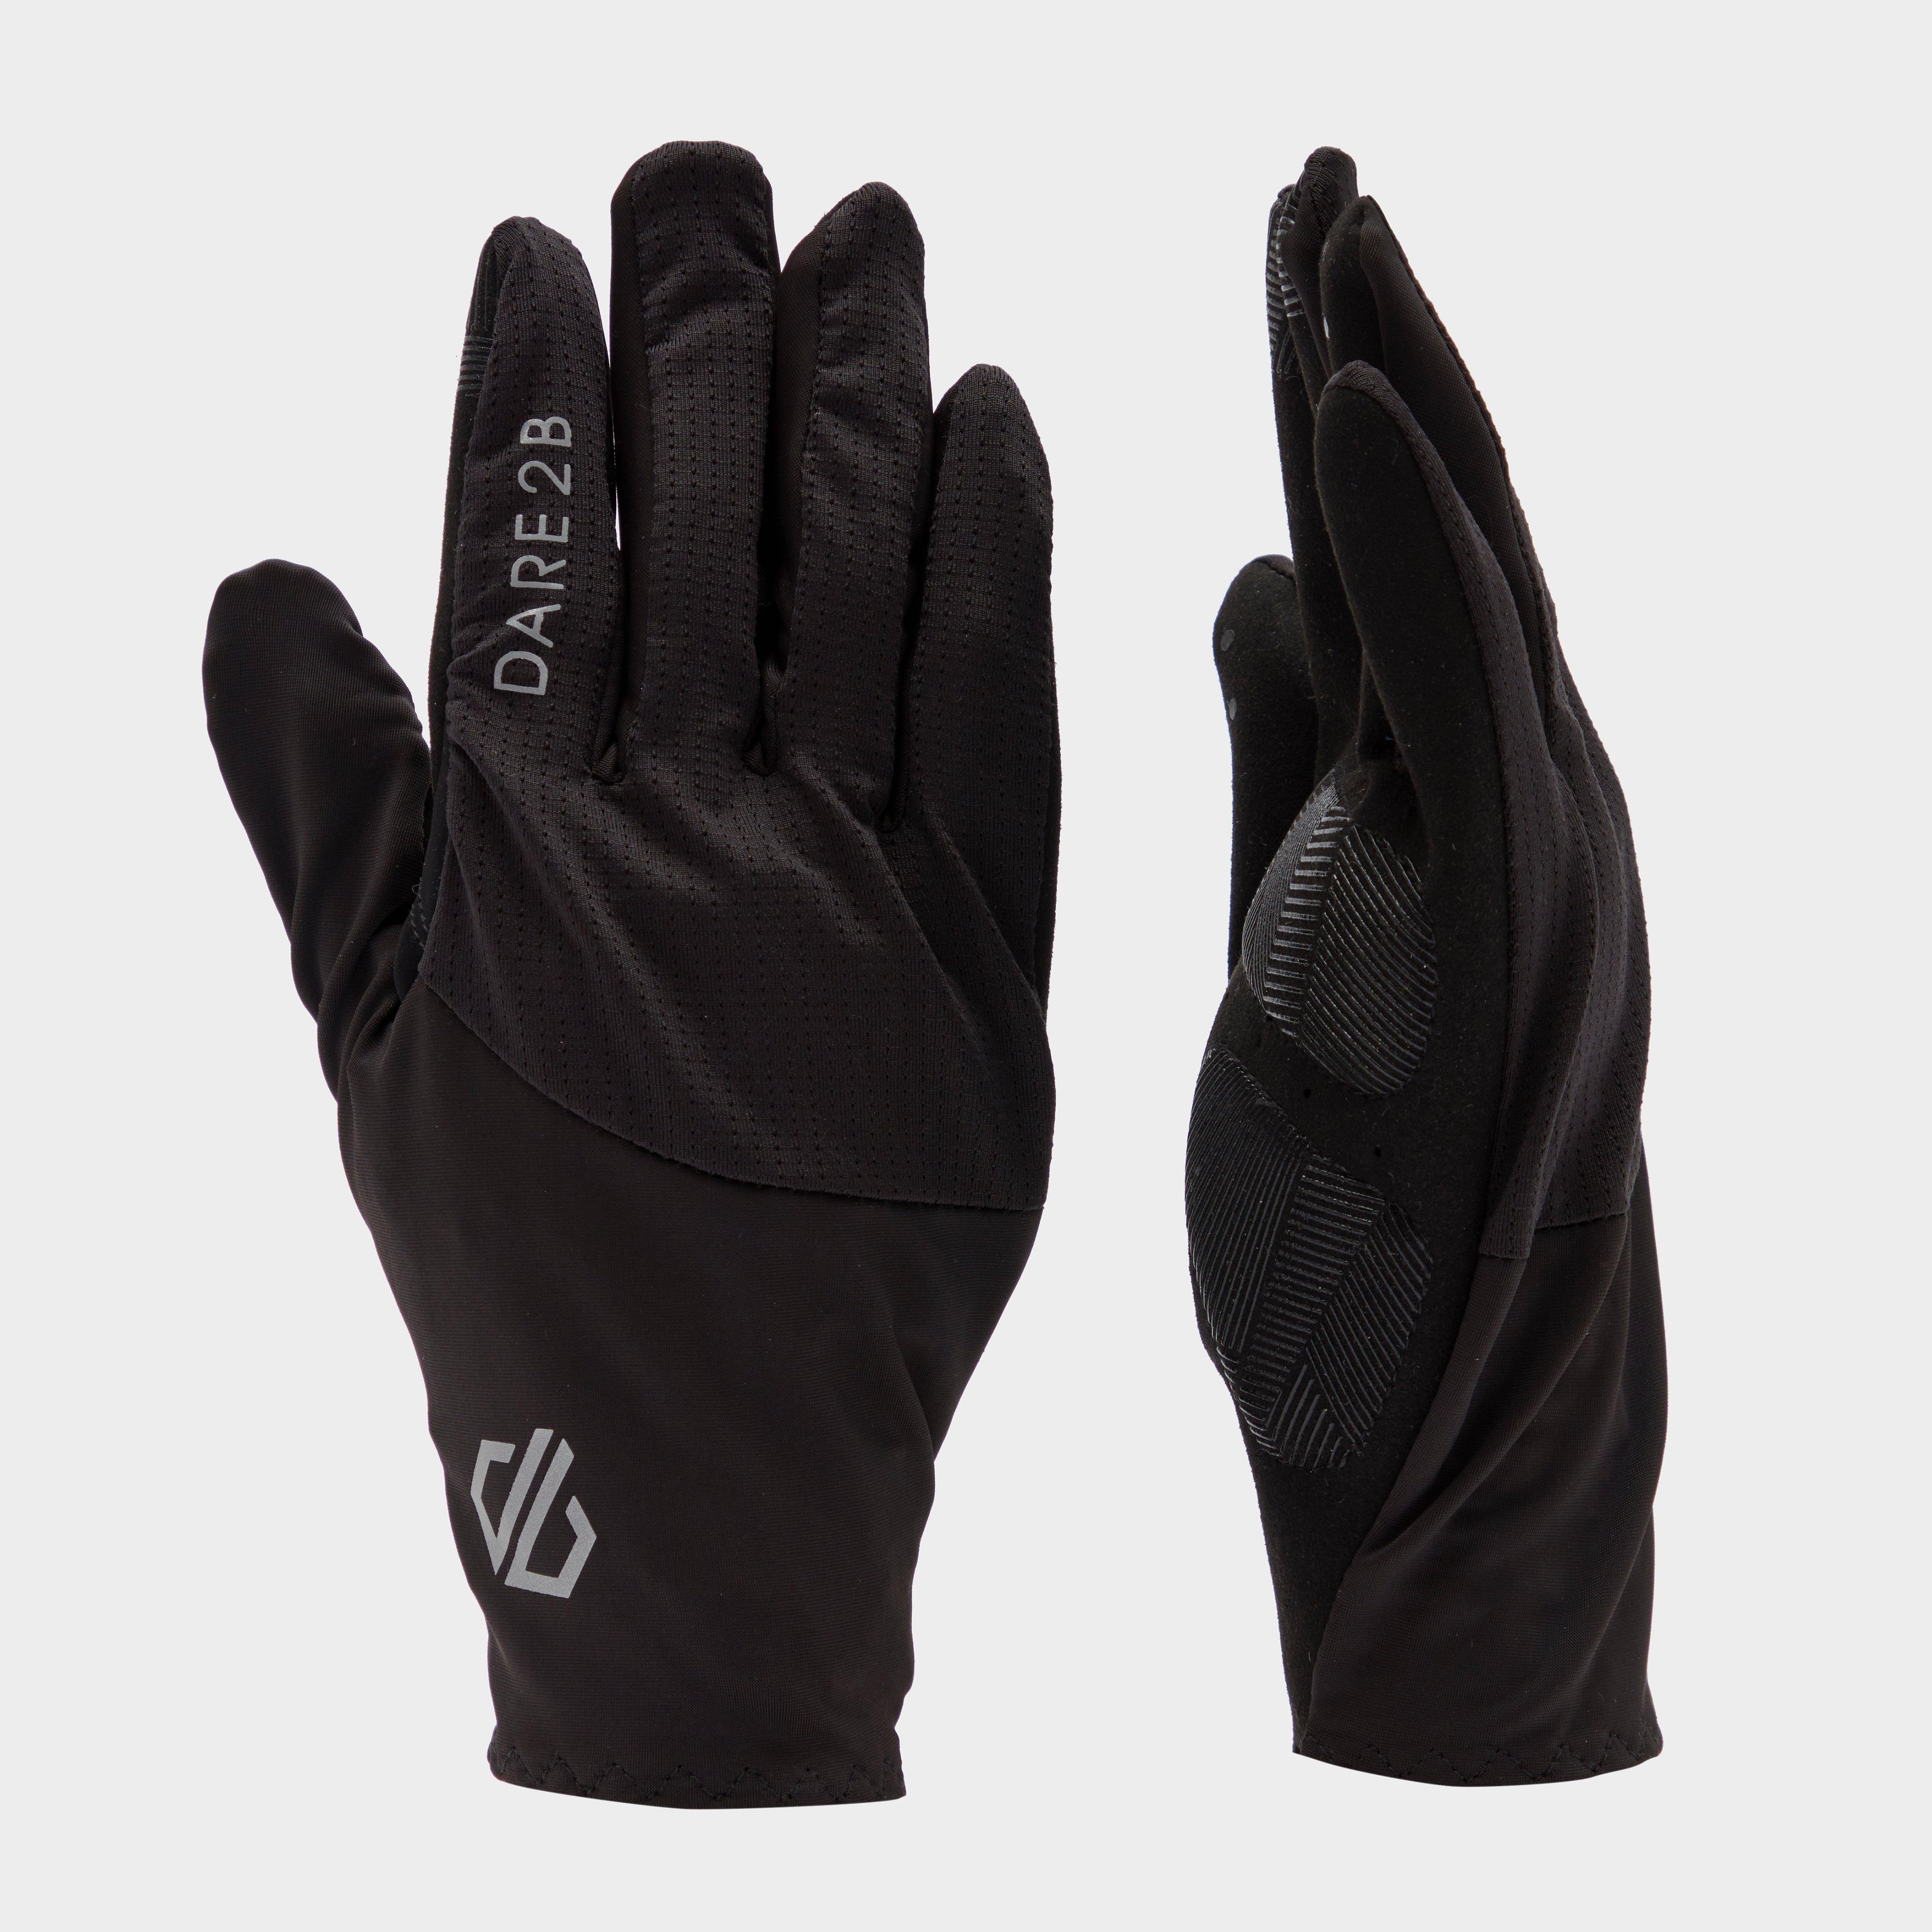 Dare 2b Mens Forcible Cycling Gloves - Black/black  Black/black